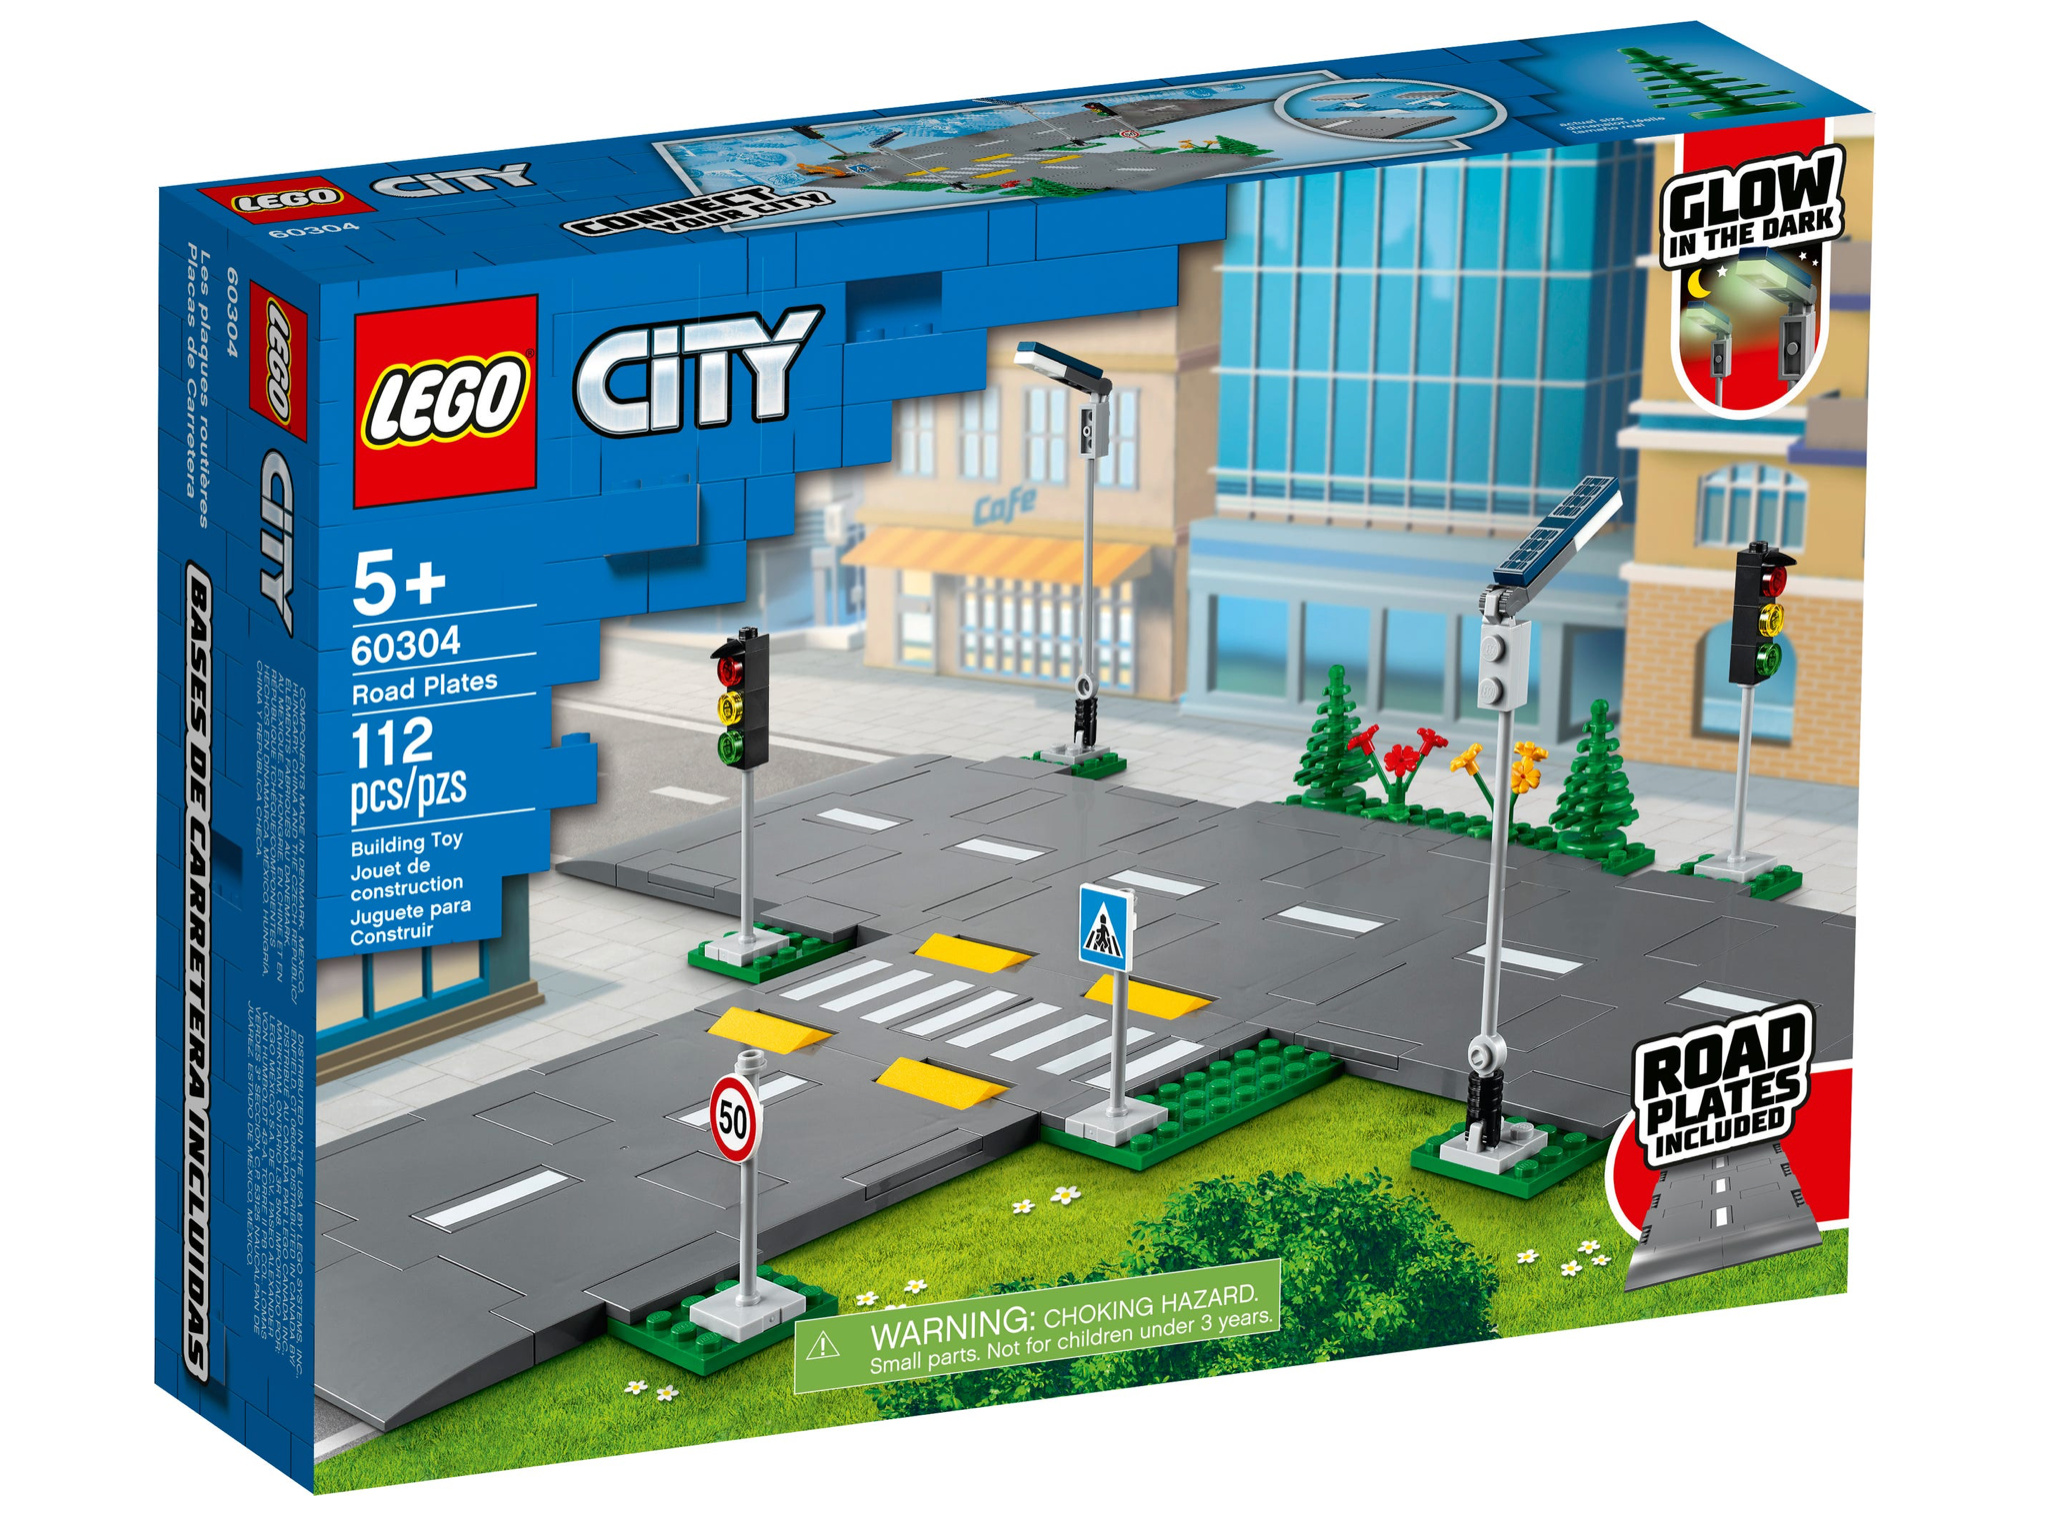 LEGO: City - Road Plates